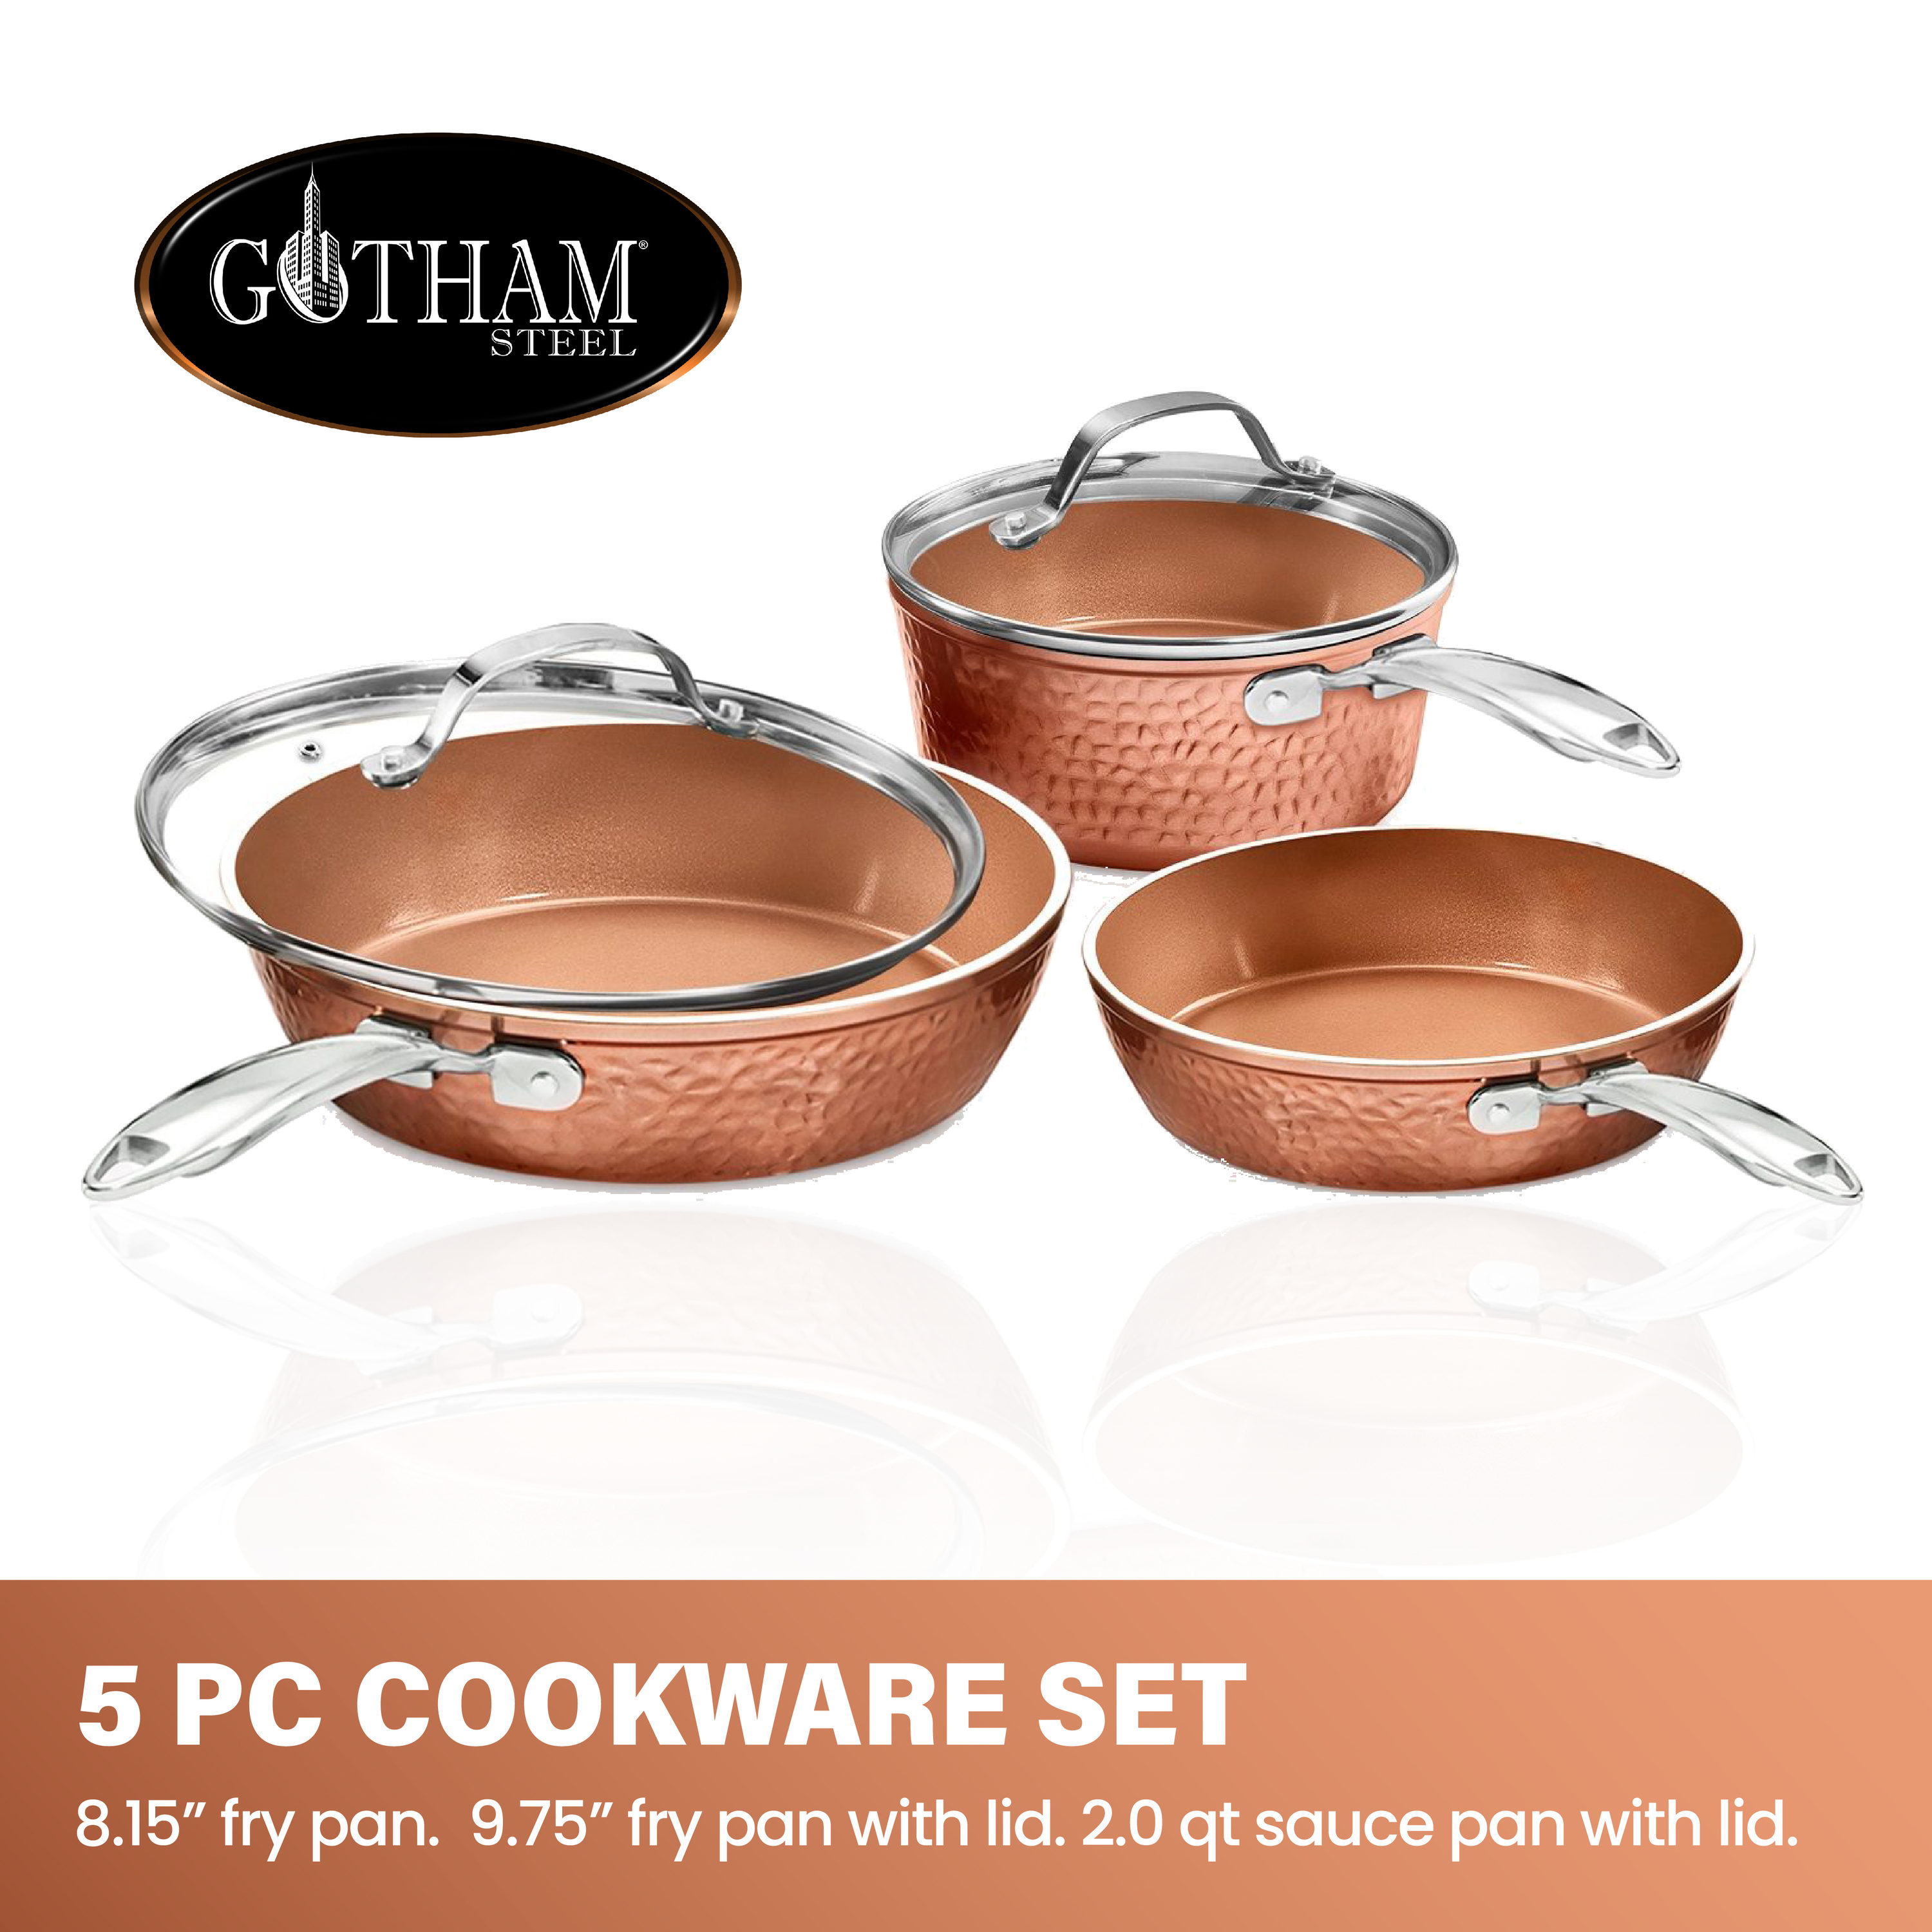 Gotham Steel 5 Piece Cookware Set